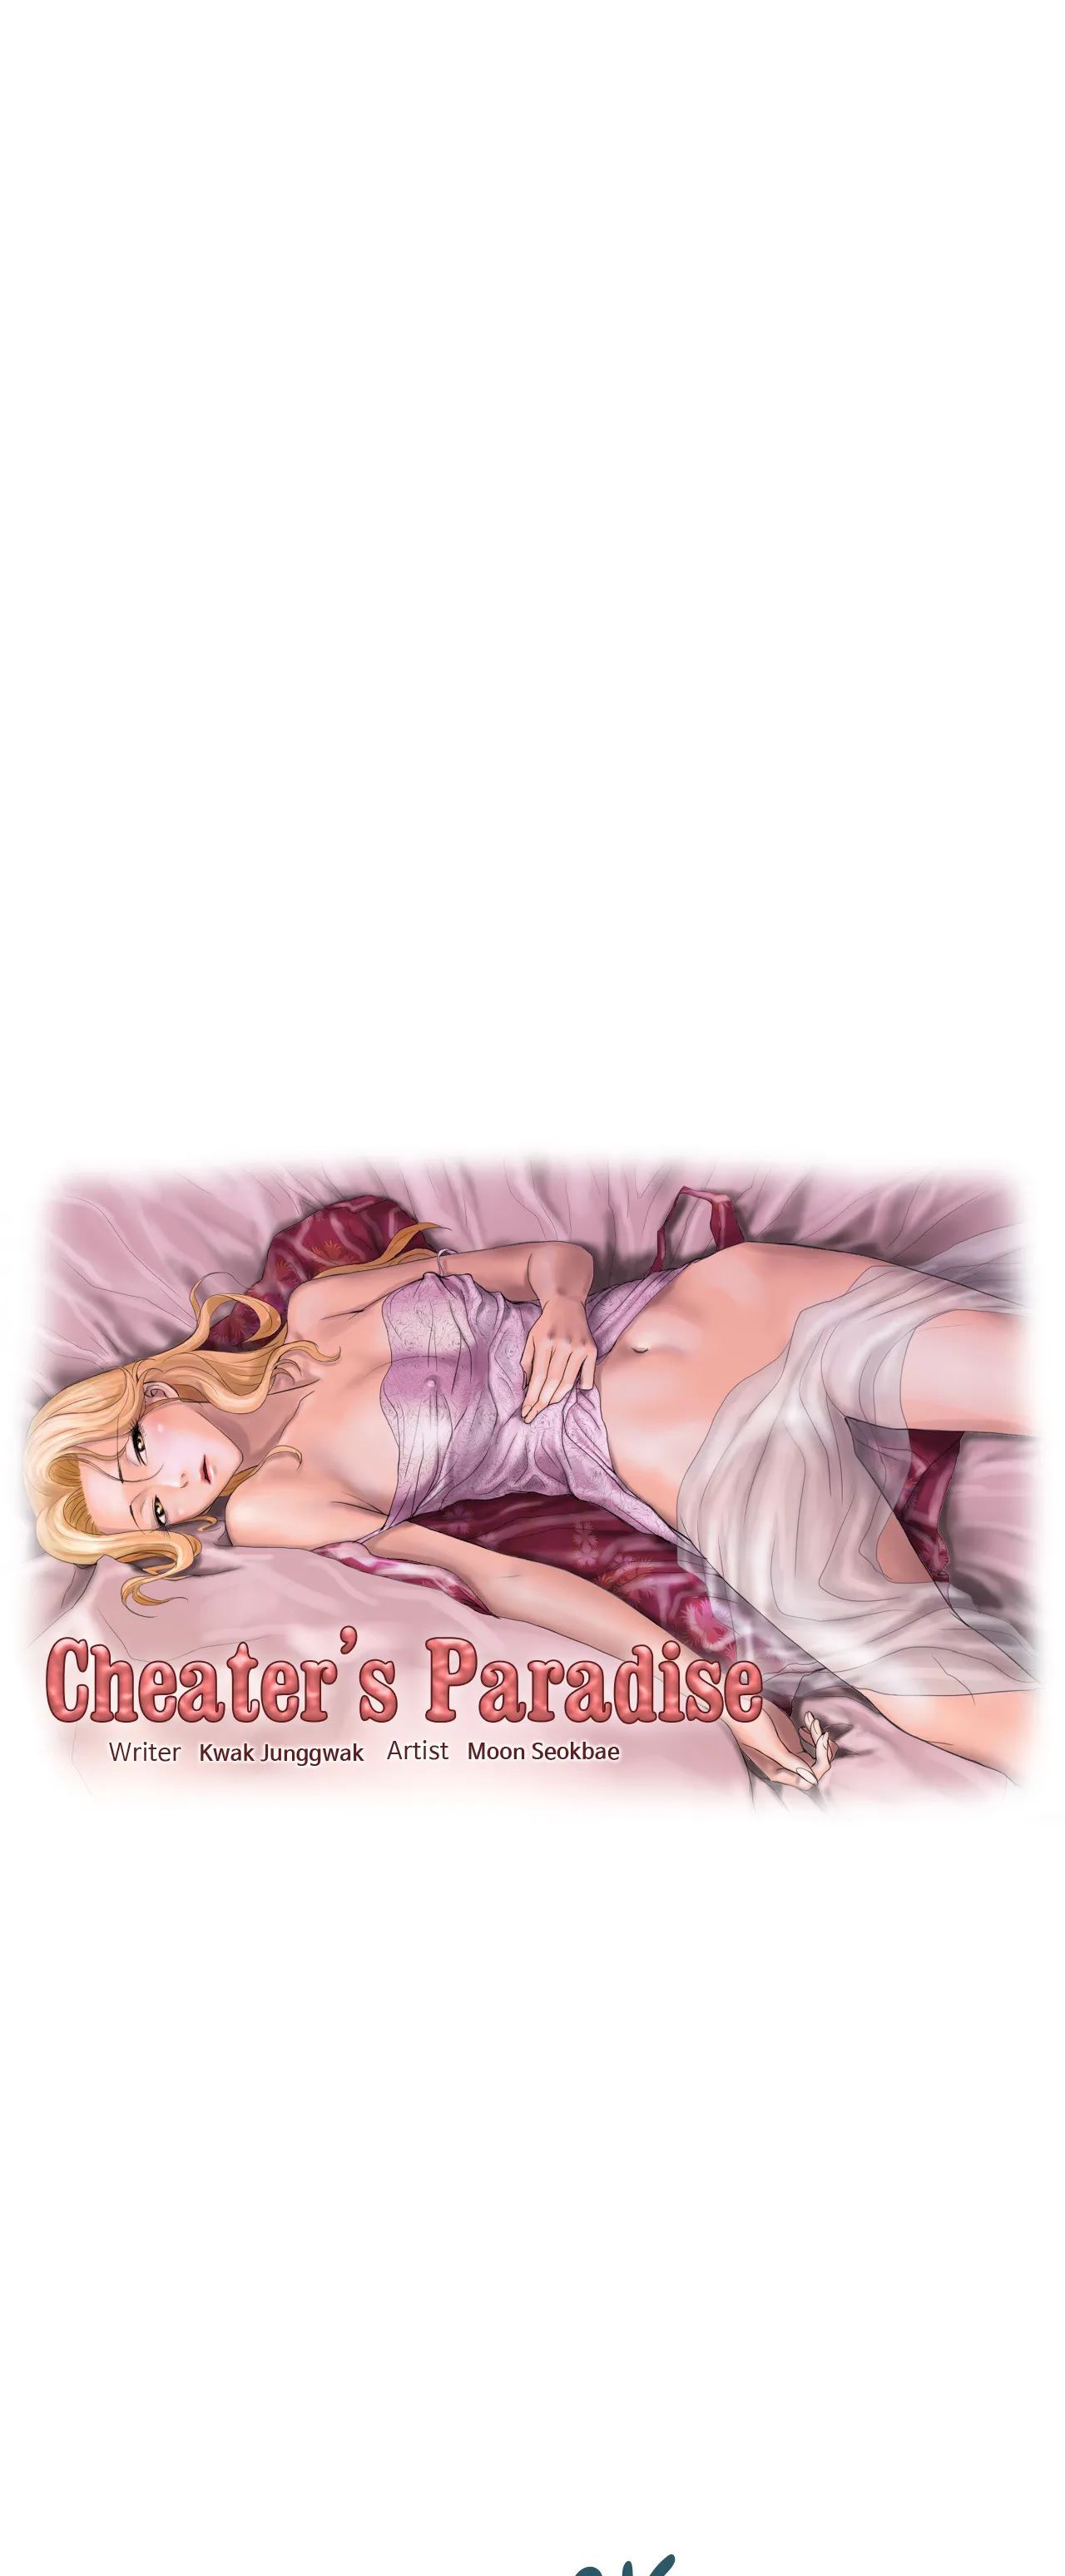 Cheater’s Paradise NEW image